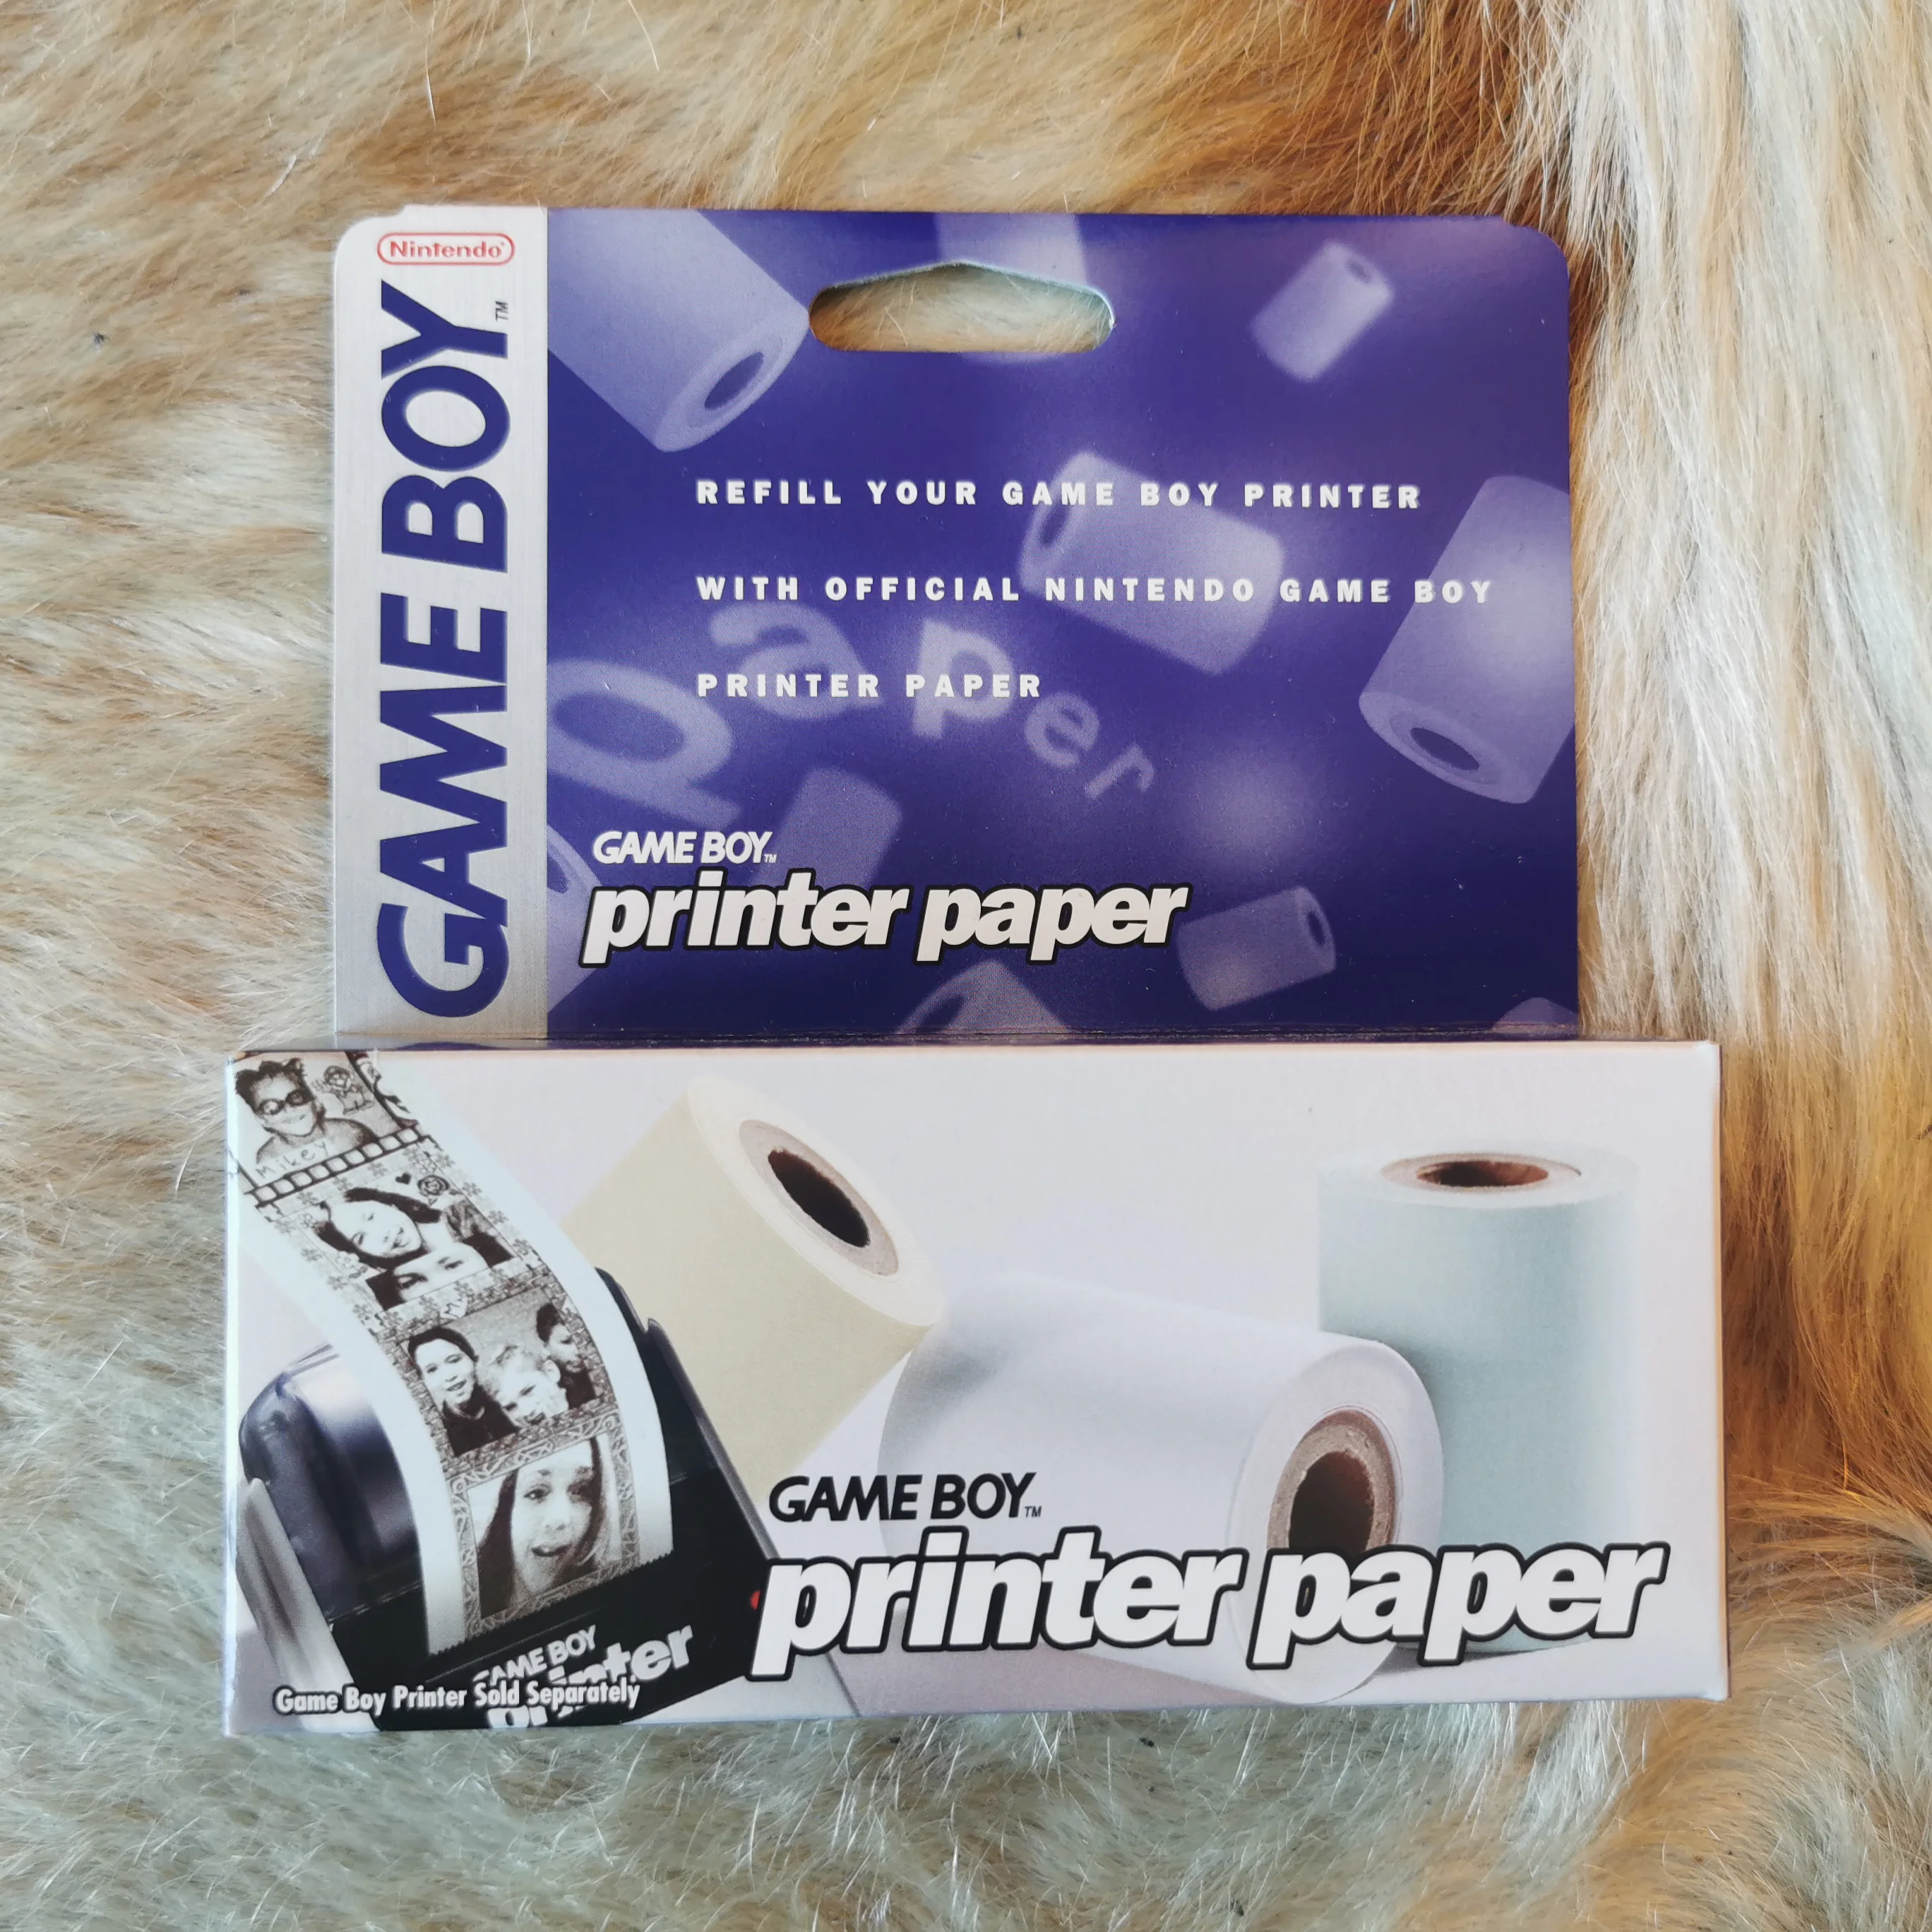  Nintendo Game Boy Printer Paper [EU]